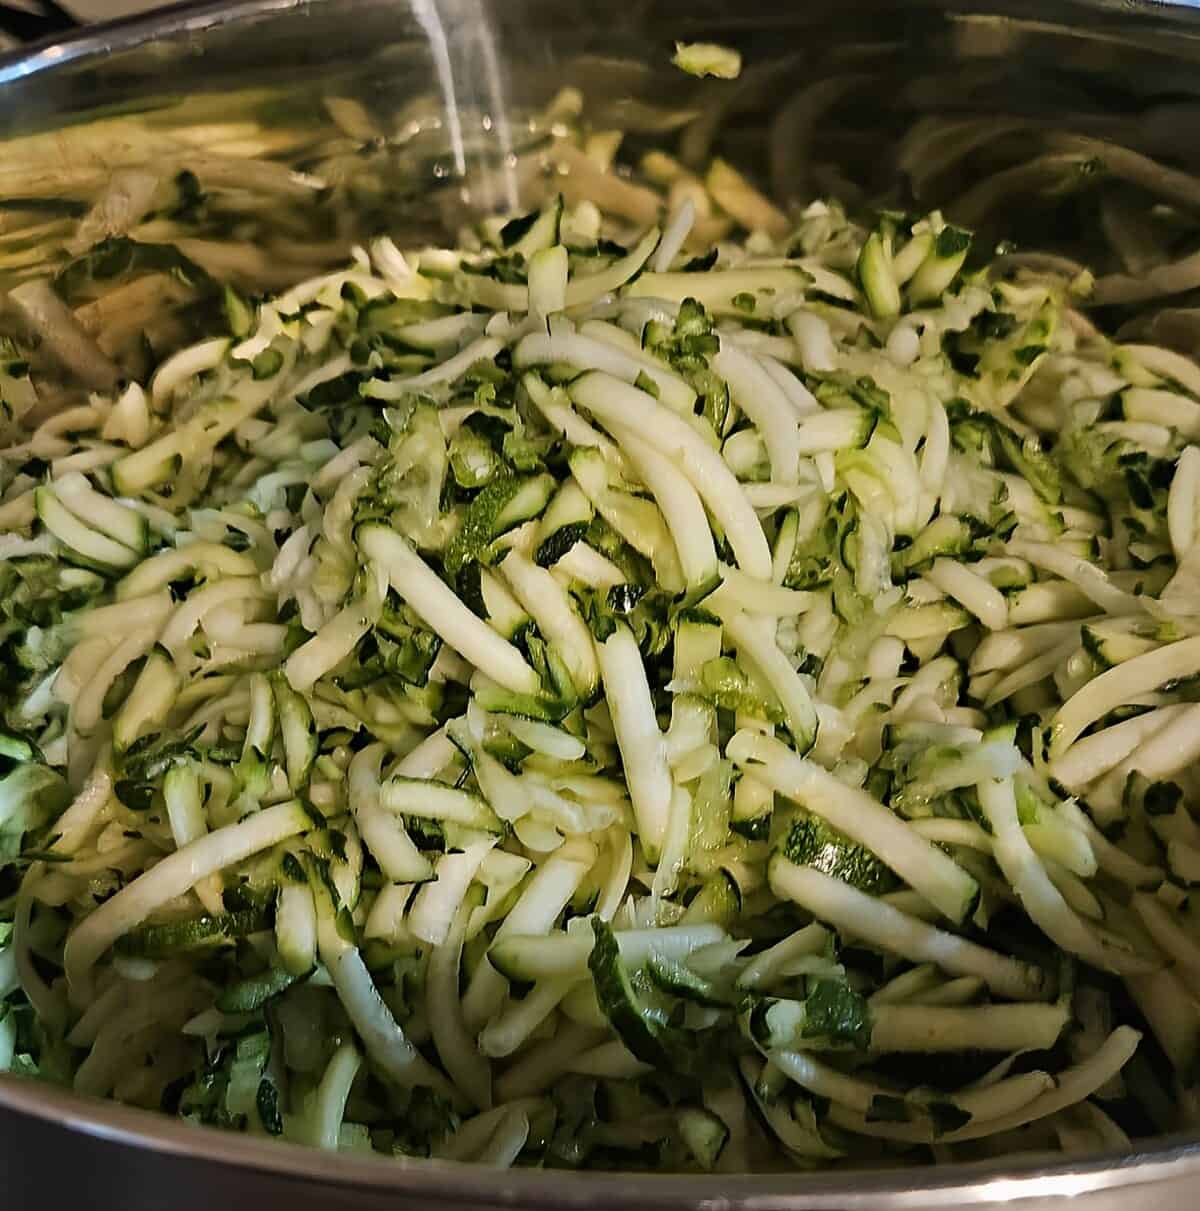 shredded zucchini in a metal mixing bowl